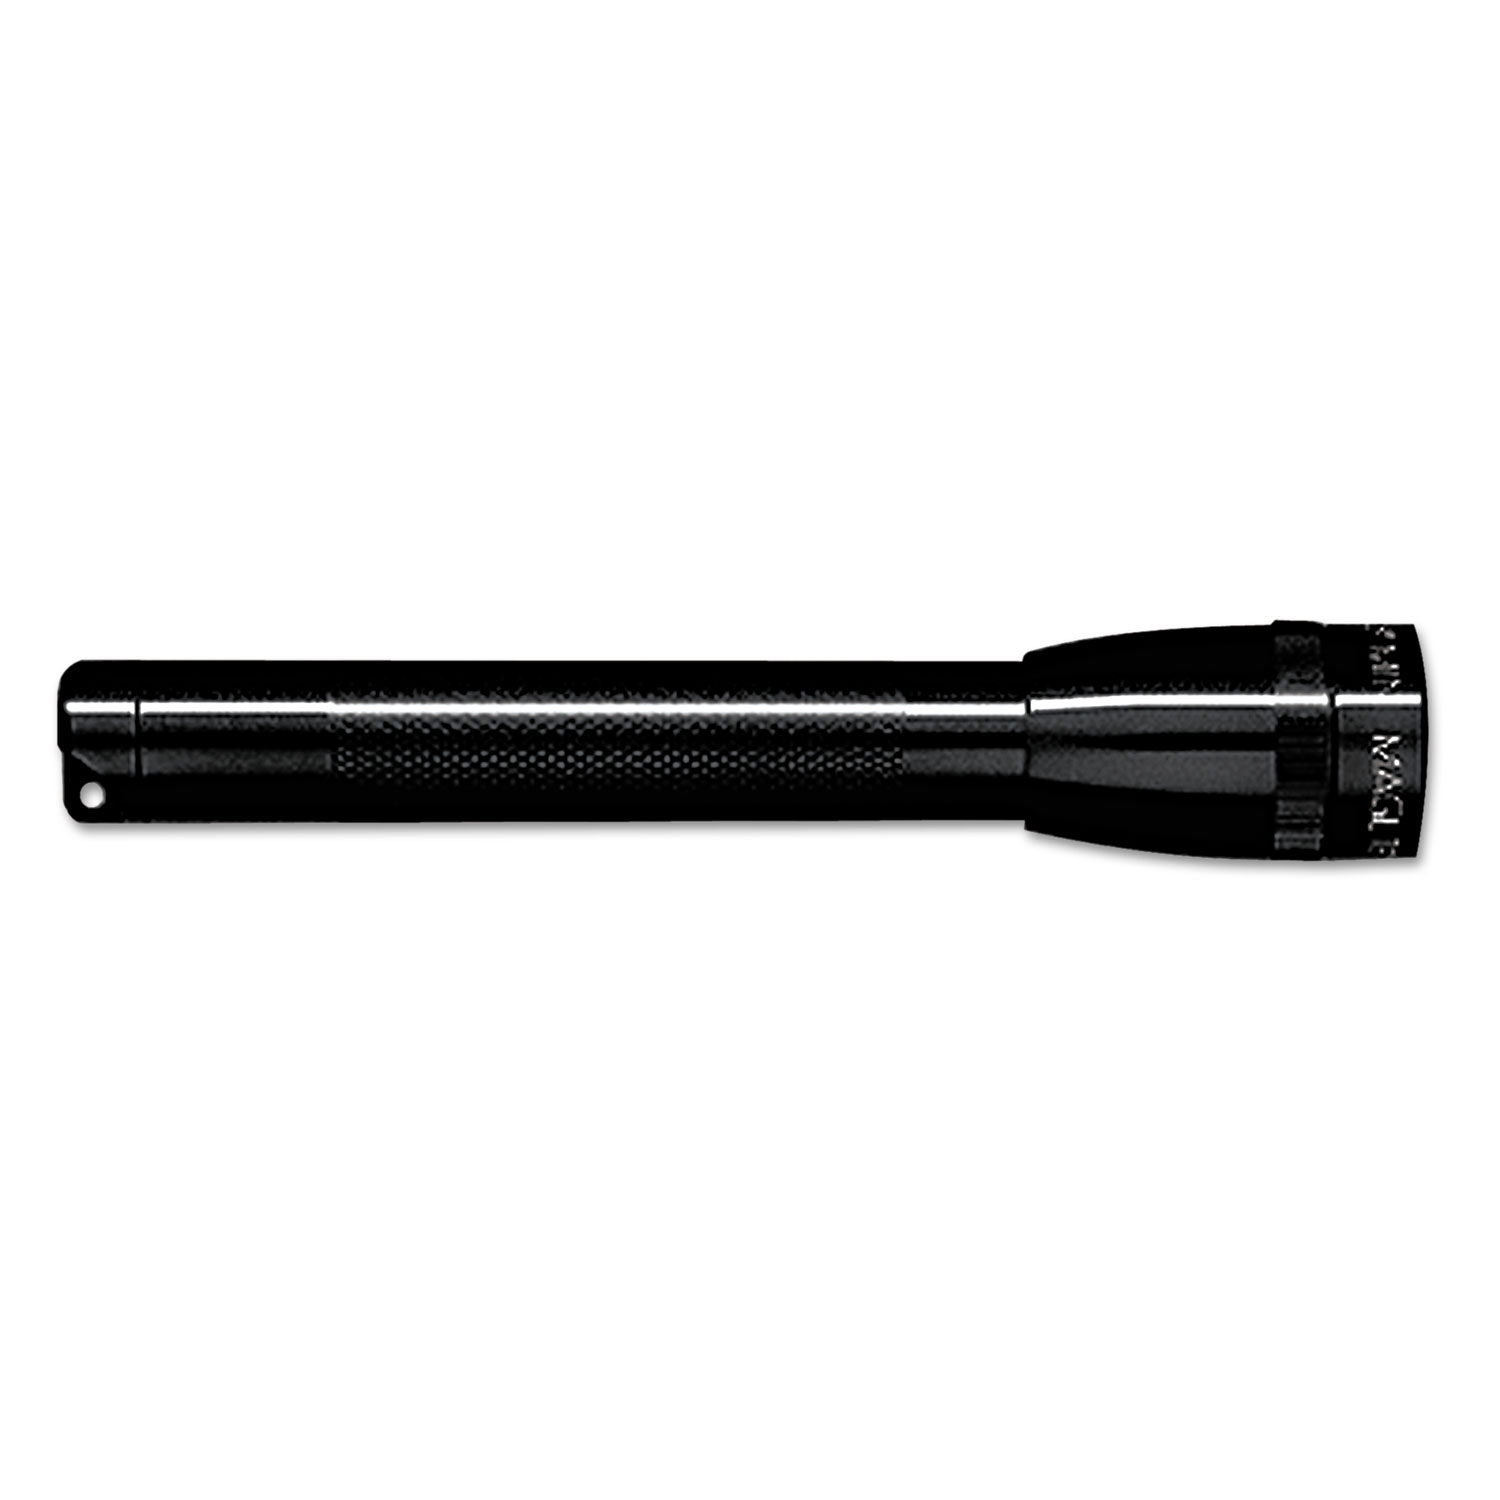  Maglite M2A016 Mini AA Flashlight, 2 AA Batteries (Included), Black (MGLM2A016) 